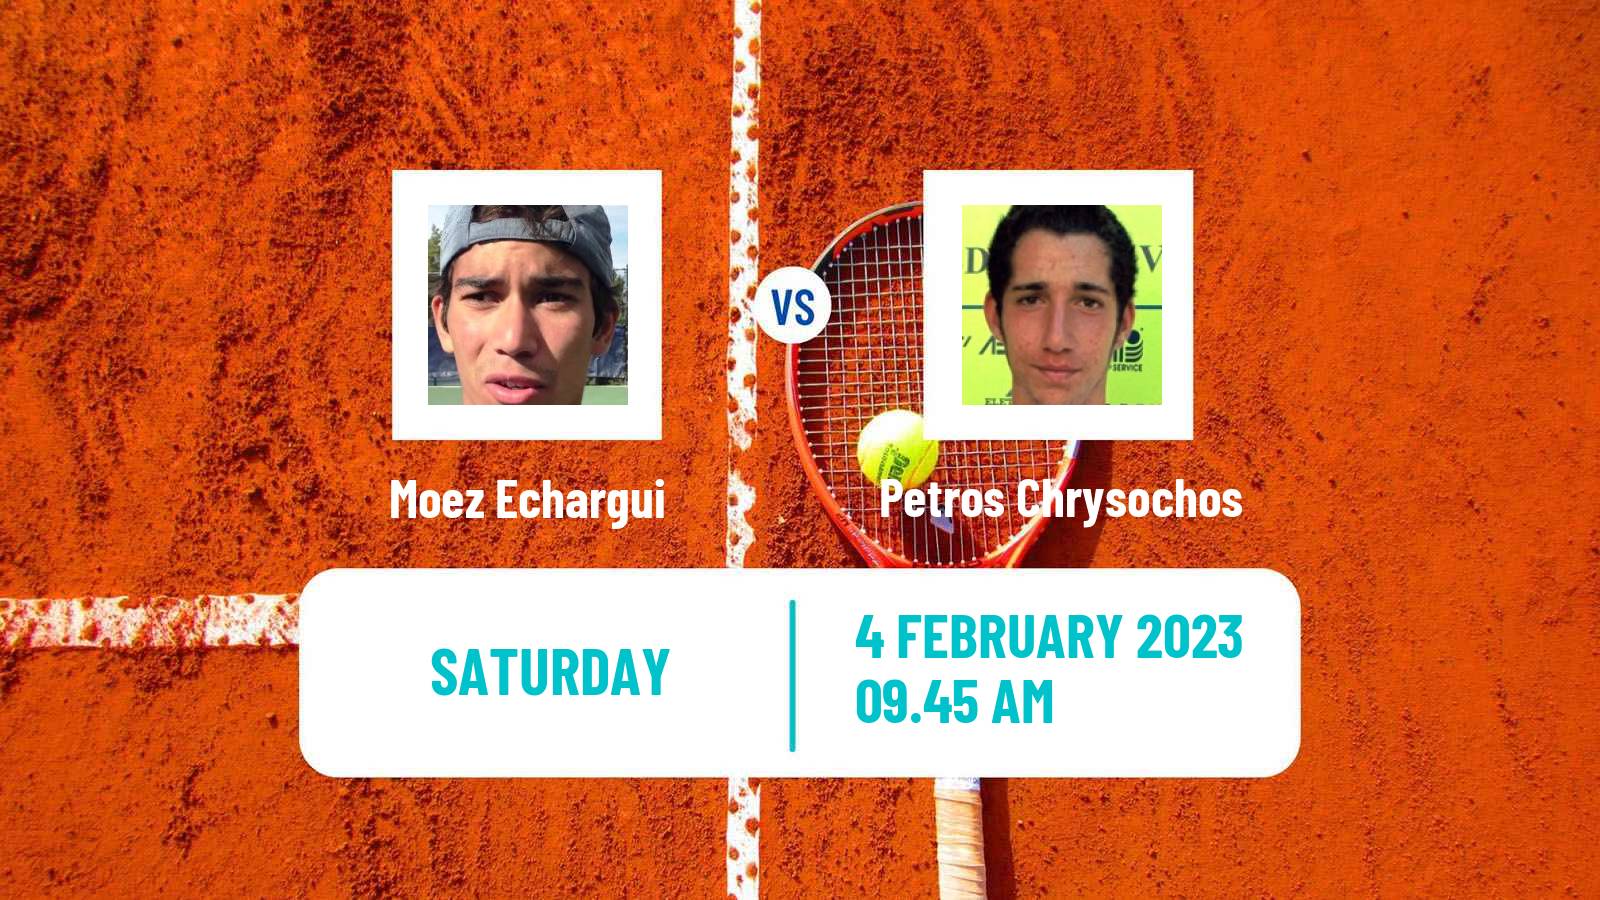 Tennis Davis Cup World Group II Moez Echargui - Petros Chrysochos